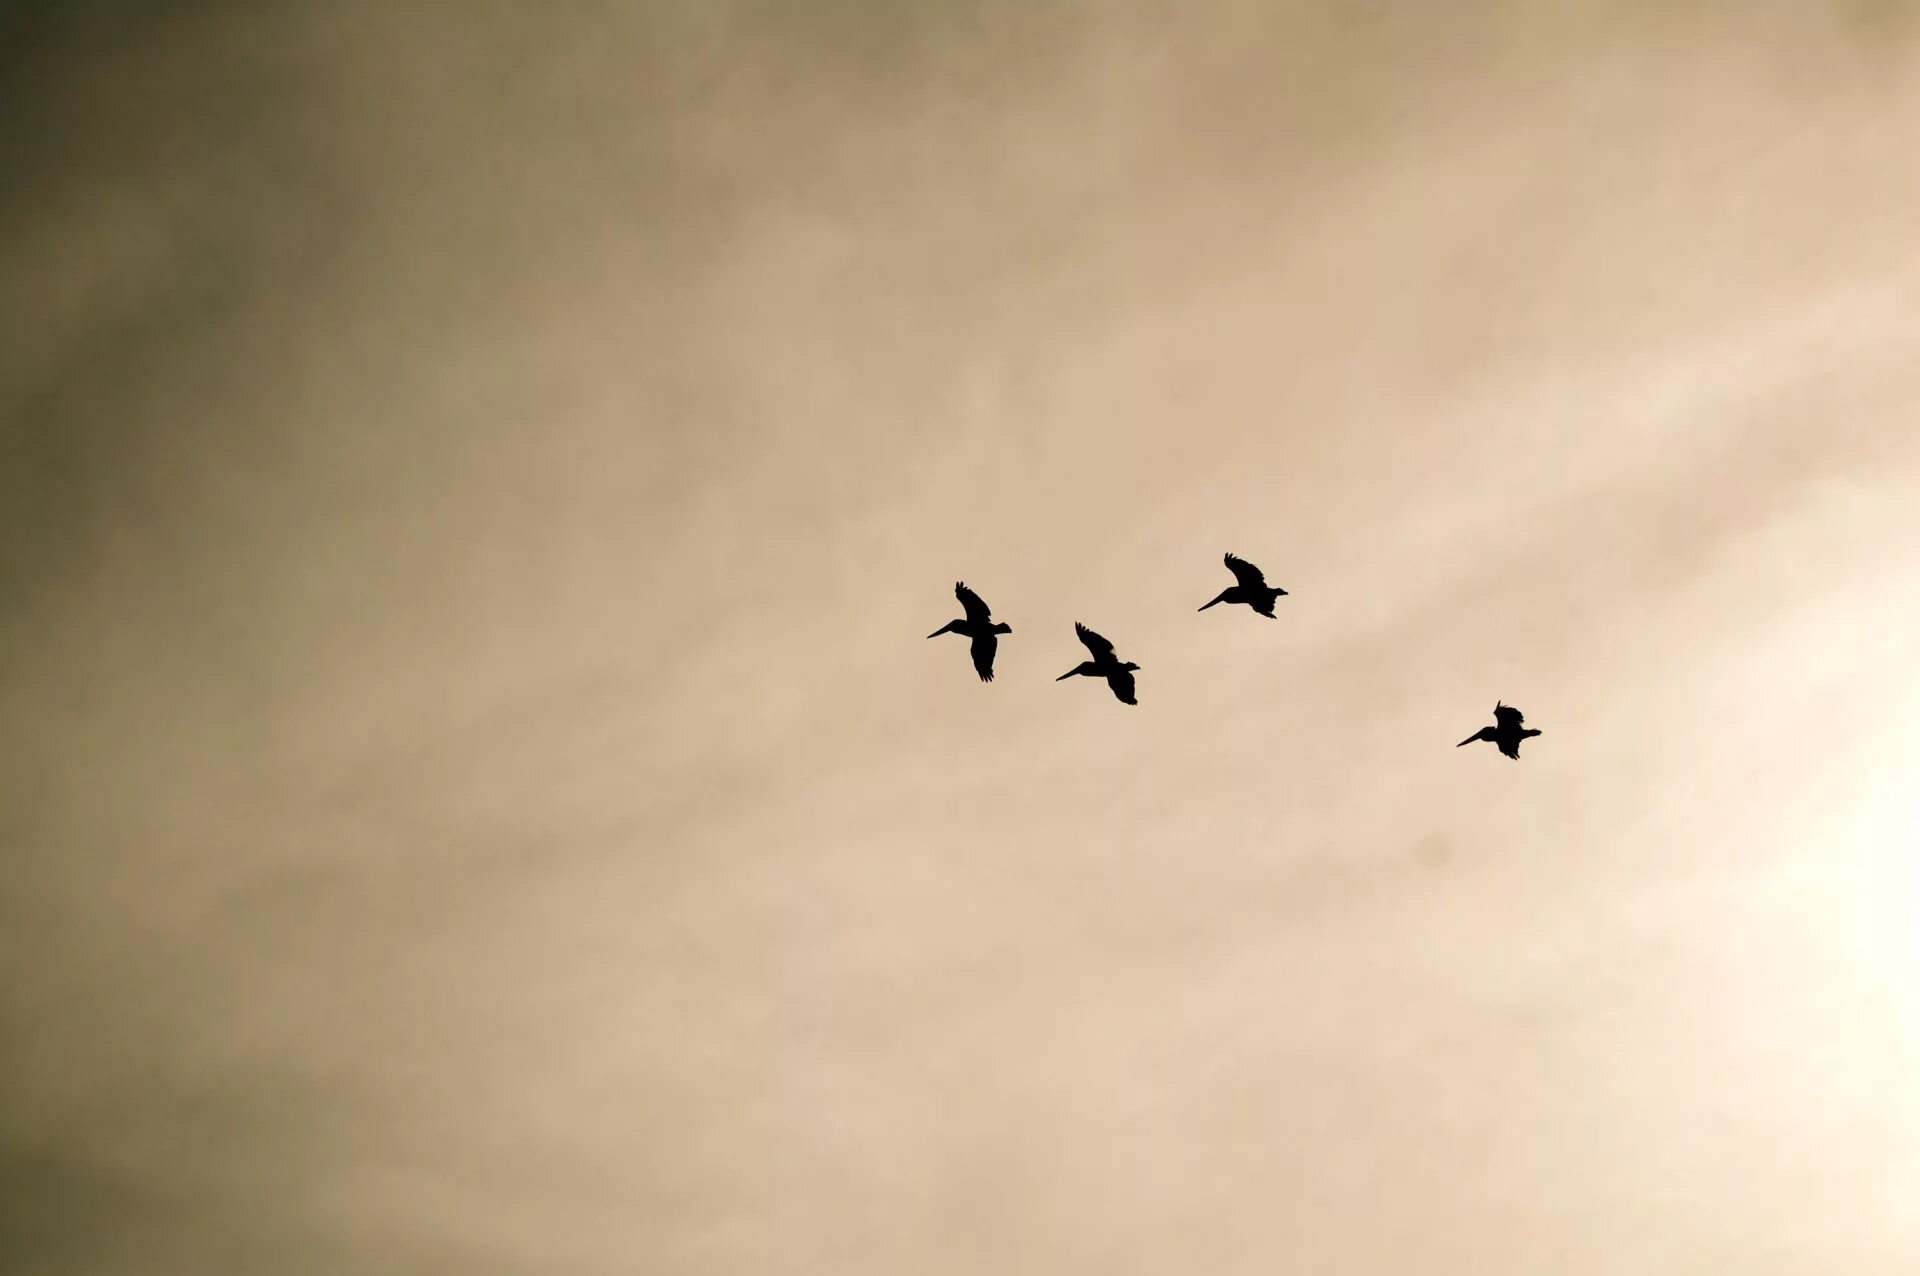 Птицы в небе. Облака с птицами Графика. Чайка в небе сепия. Рисунок стая птиц в полете.